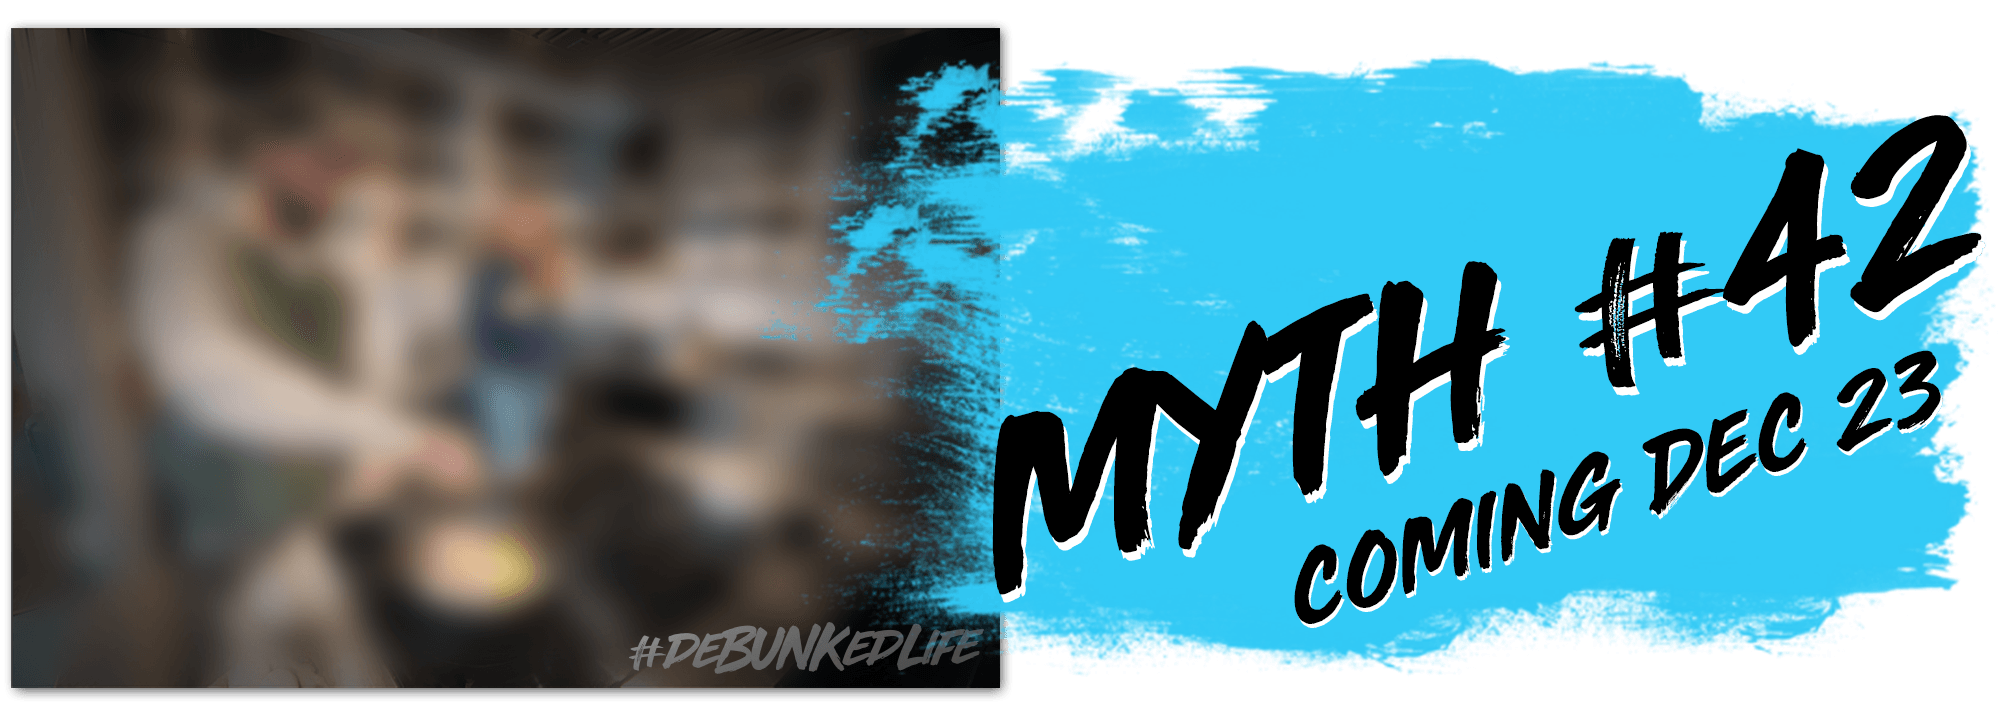 Blur-comingSoon-myth42